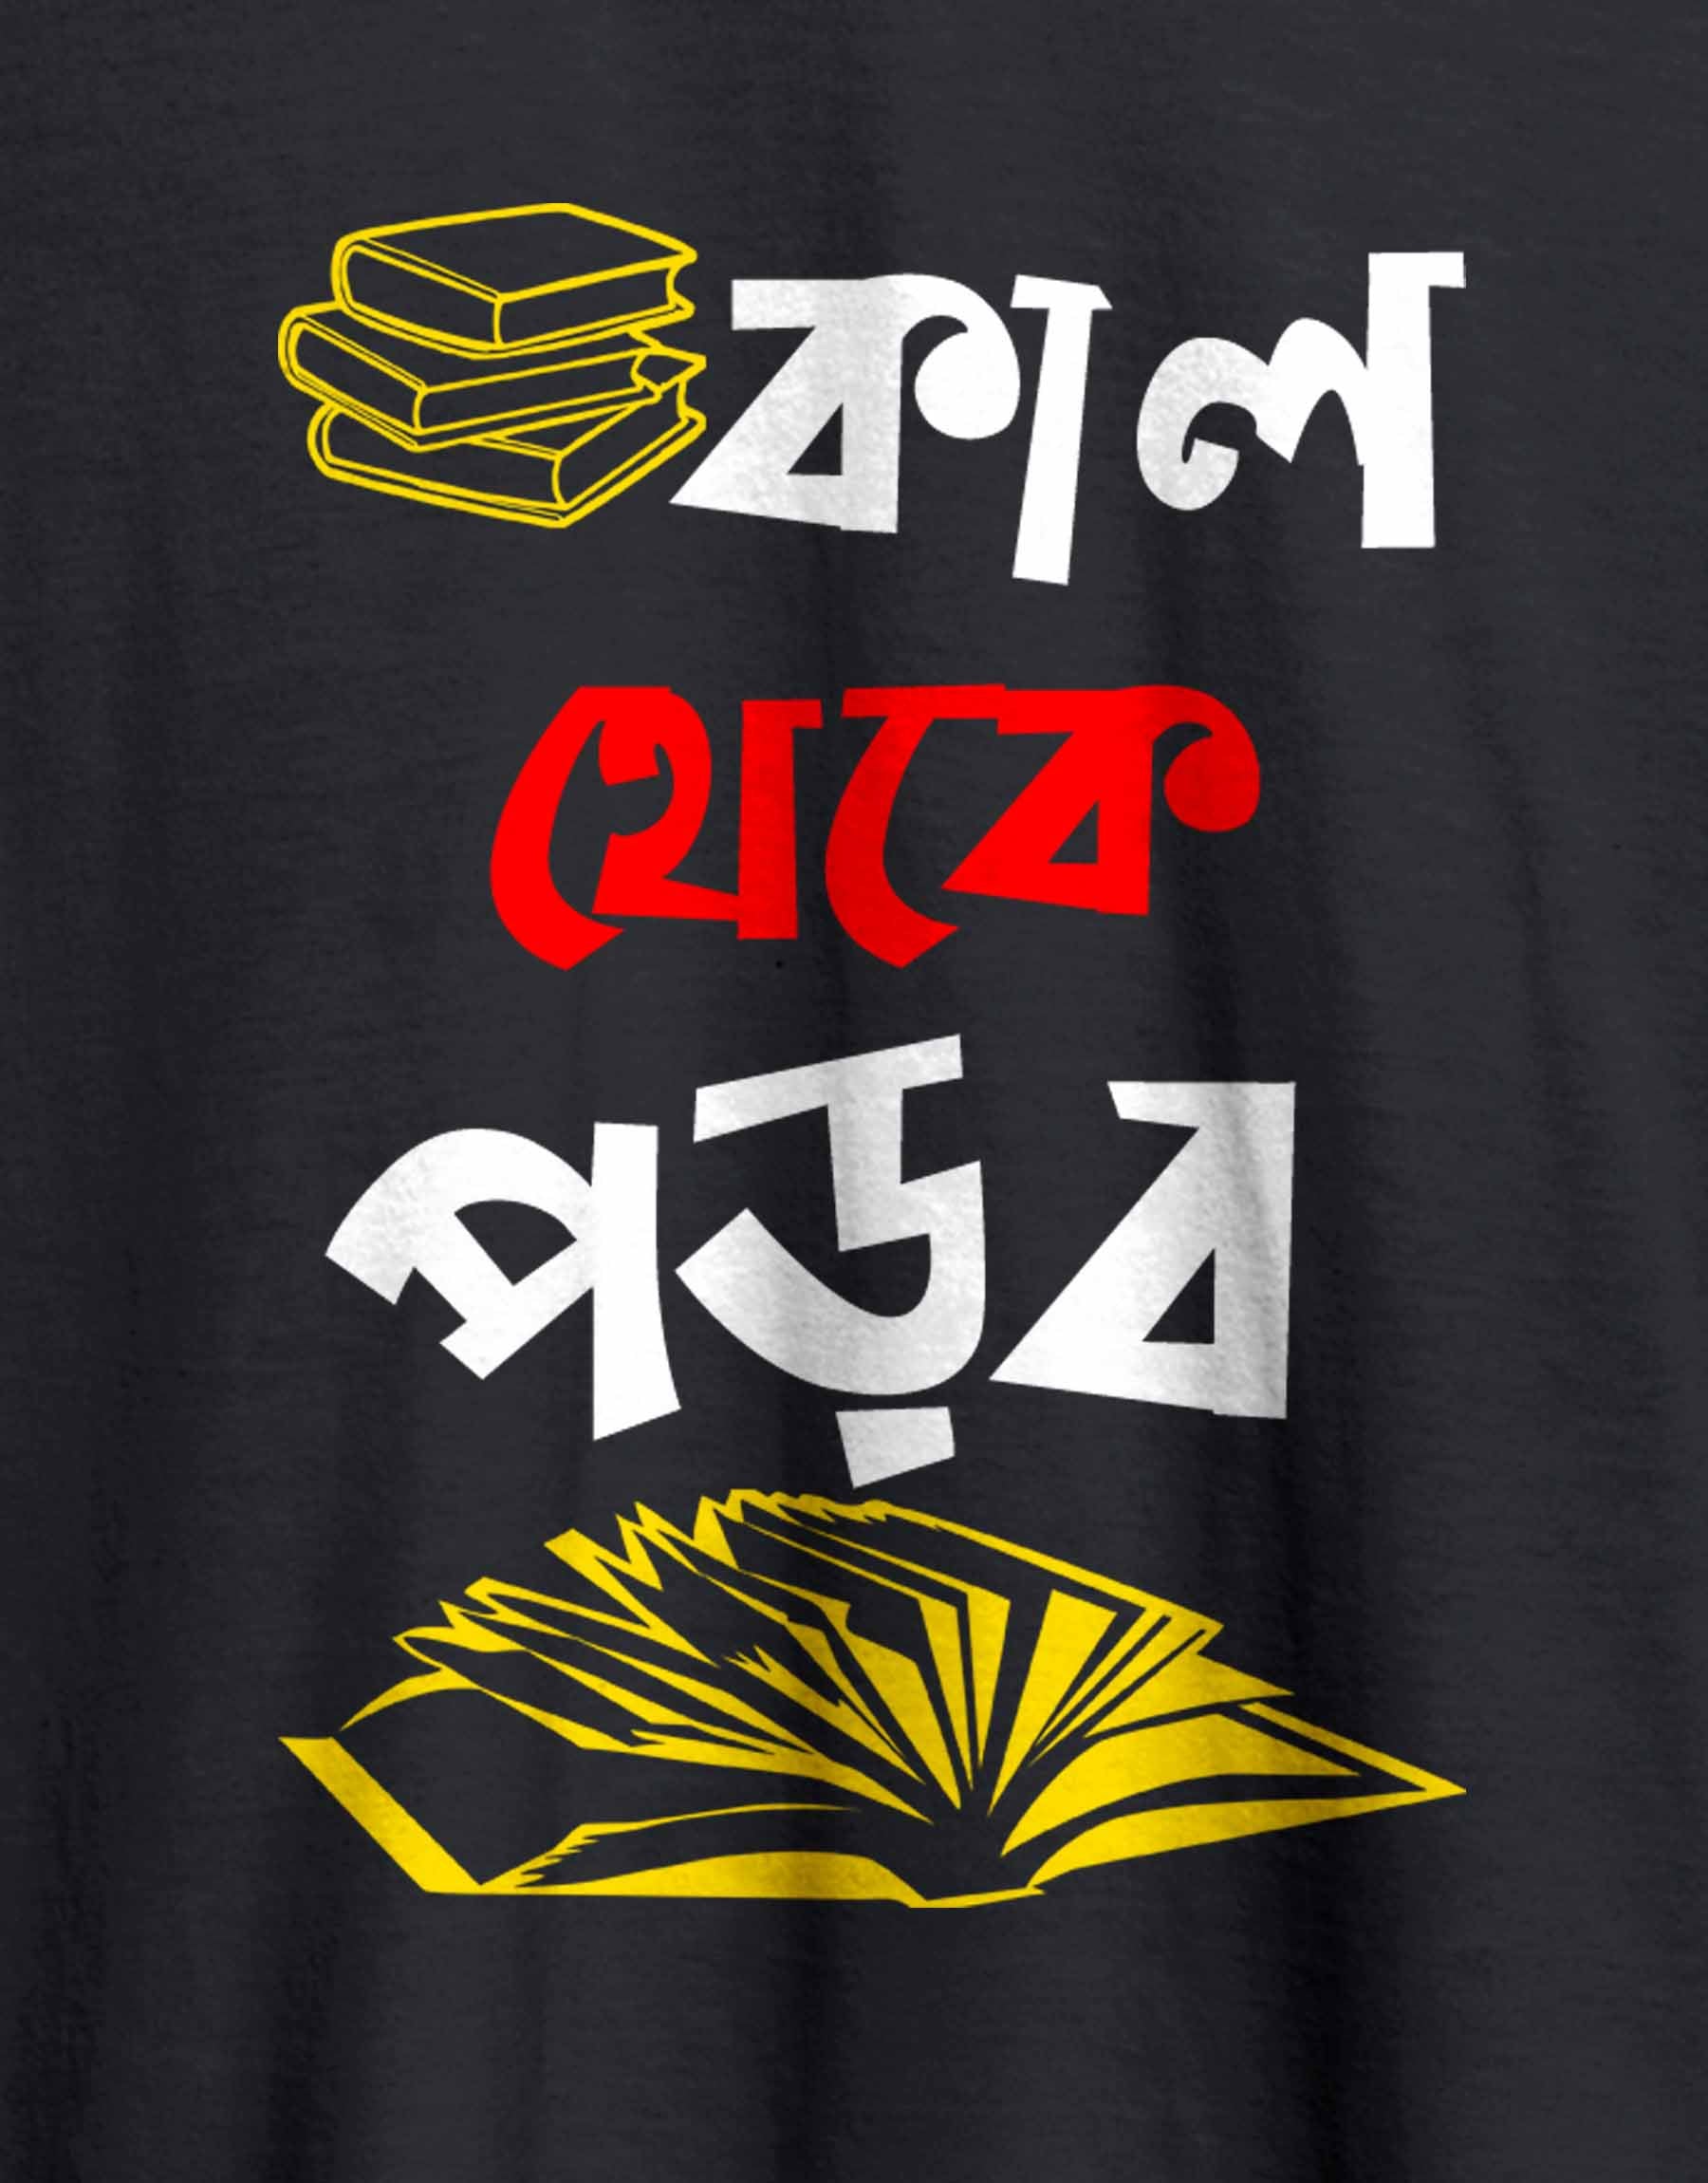 Kal Theke Porbo - Unisex Bengali Tshirt - 499.00 - TEEGURUJI - Free Shipping